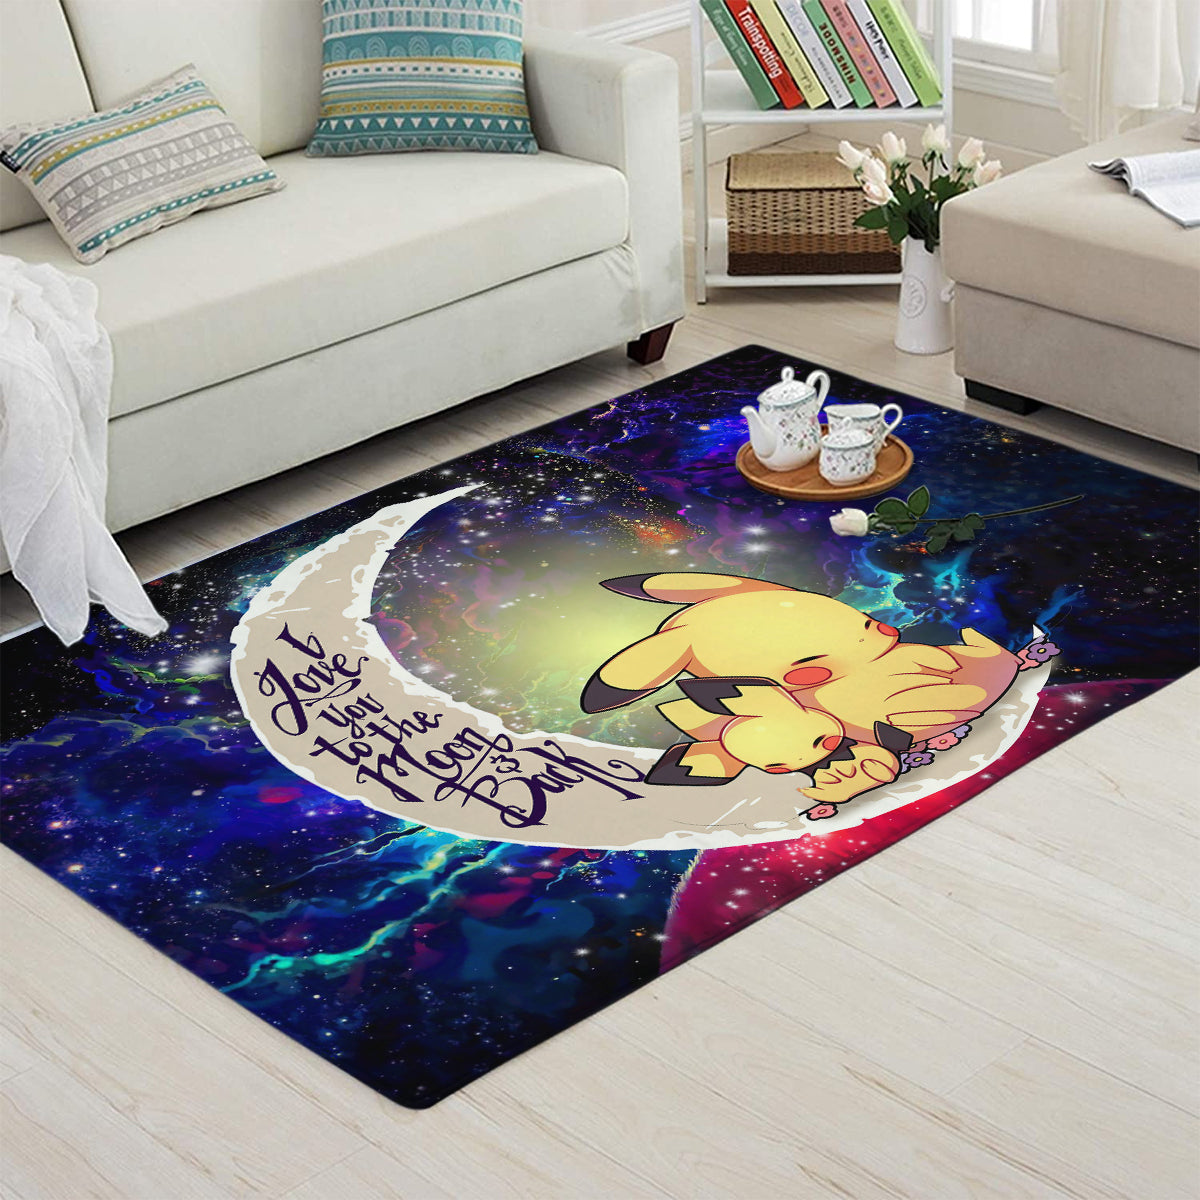 Pikachu Pokemon Sleep Love You To The Moon Galaxy Carpet Rug Home Room Decor